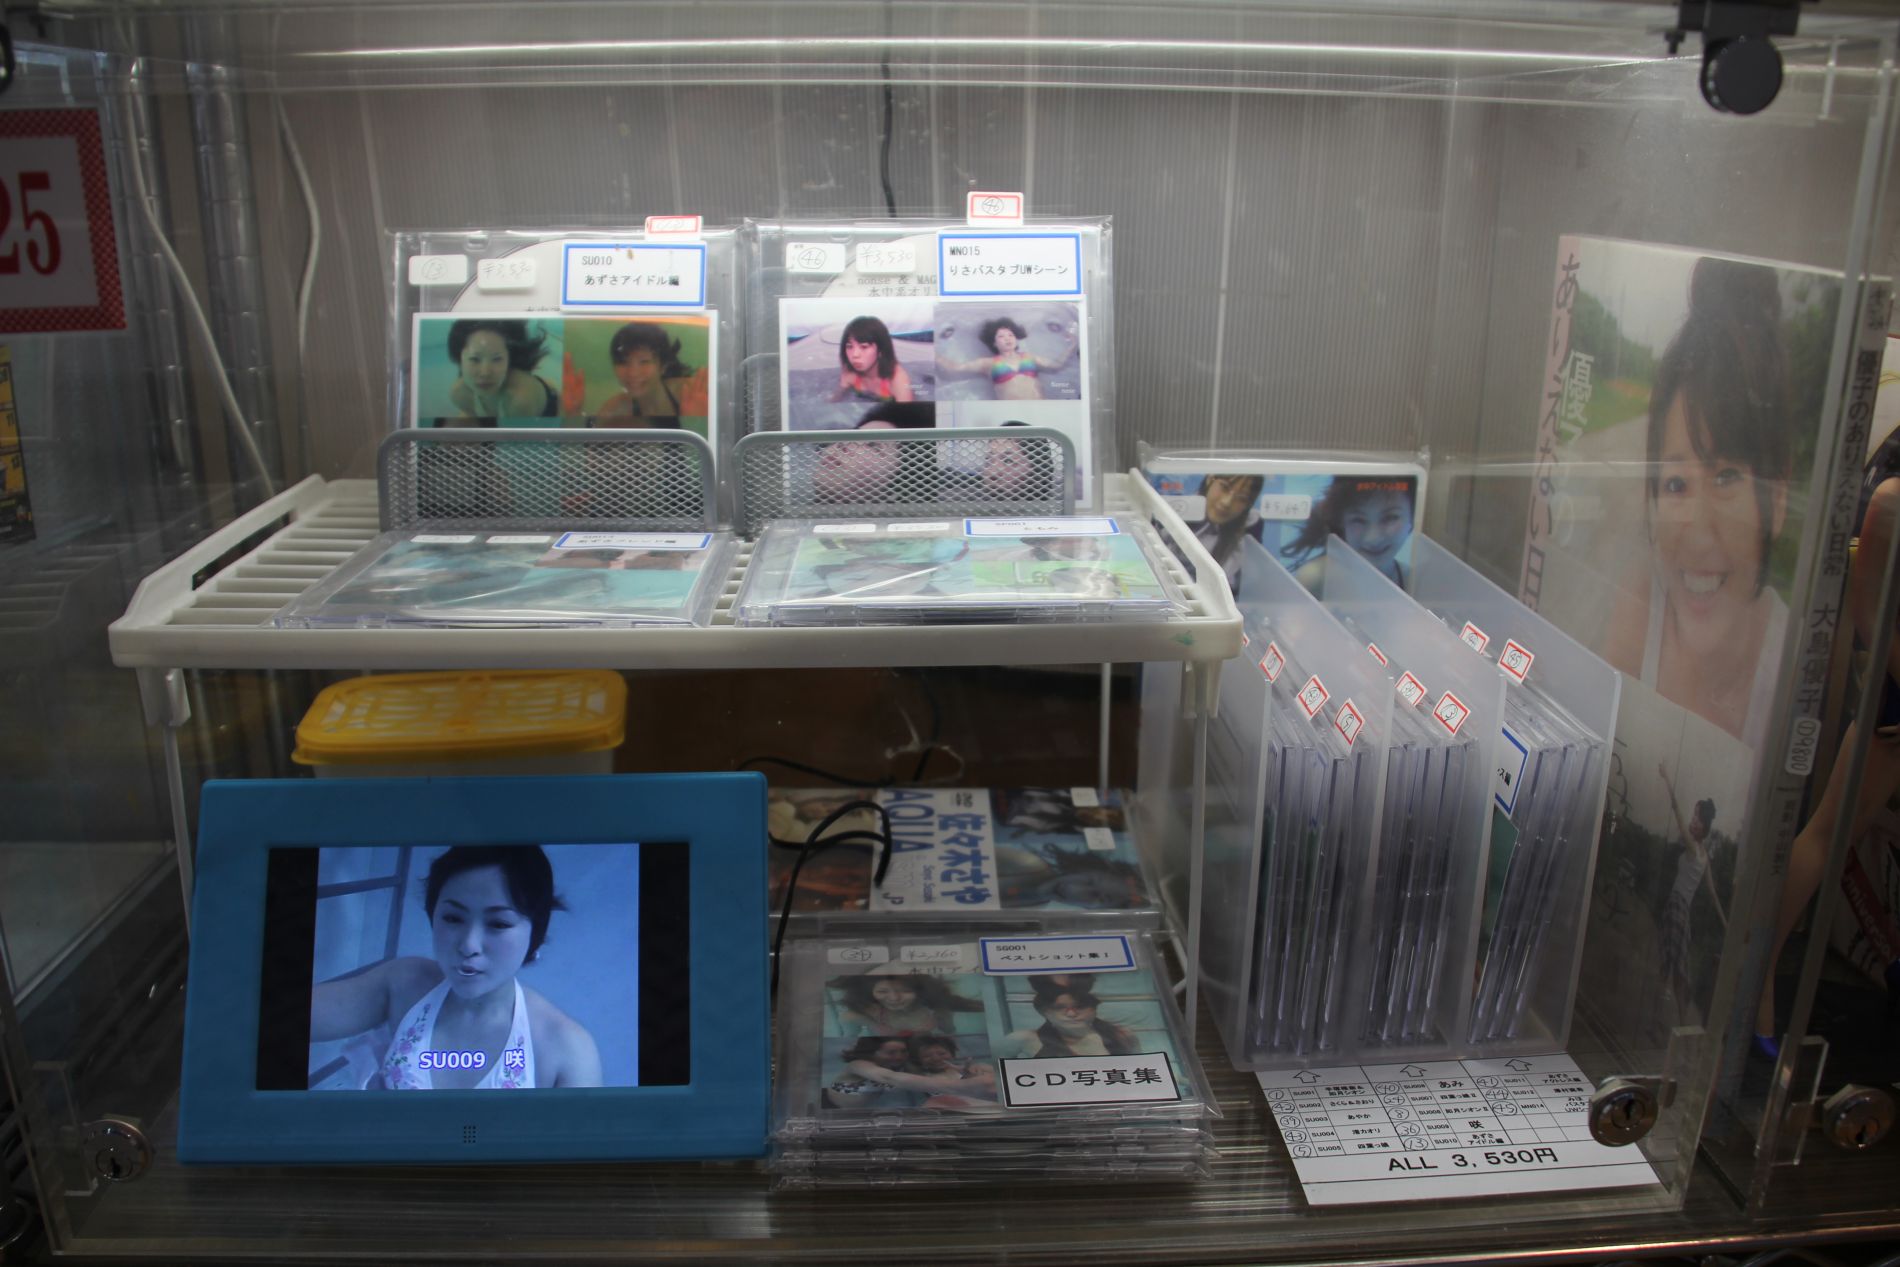 Fetish DVDs featuring women underwater are sold in Akihabara, Tokyo, Japan.